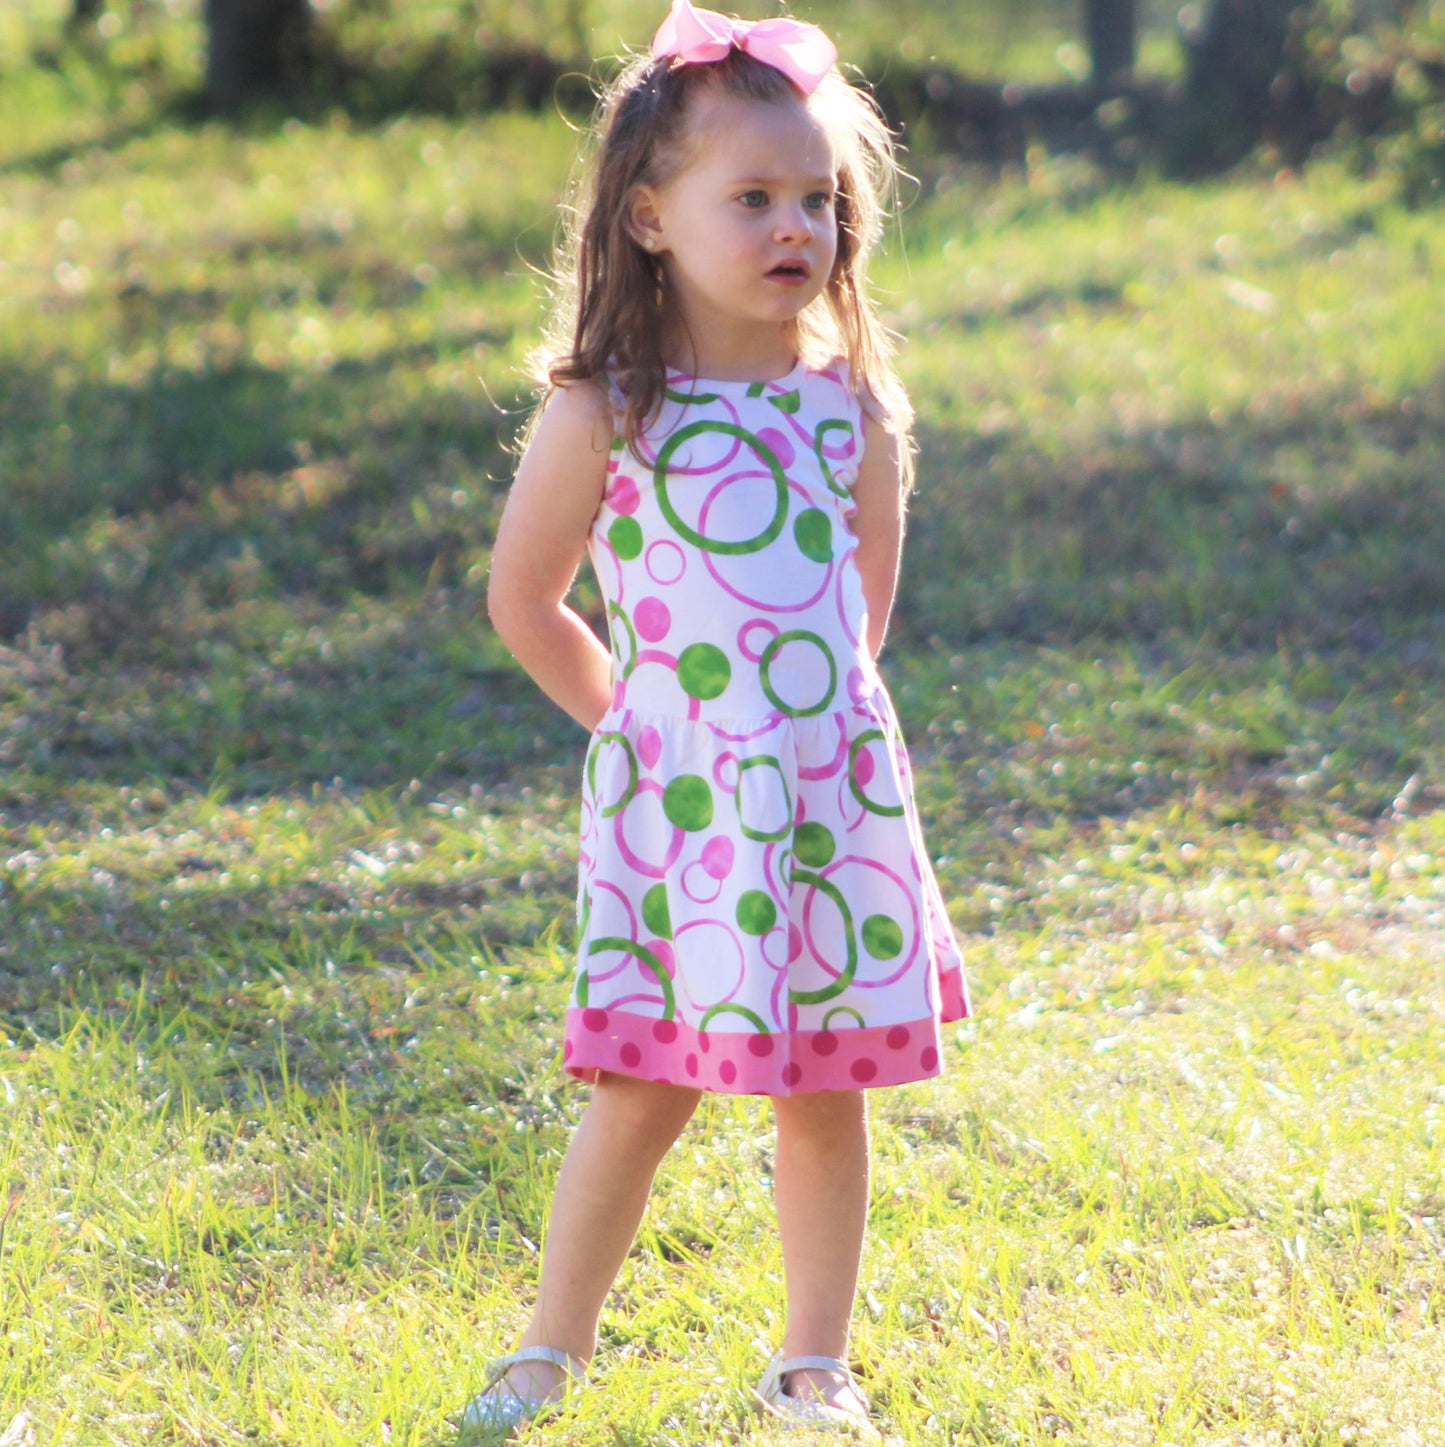 AnnLoren Big Little Girls Pink Green Bubble Design Cotton Knit Swing Dress Holiday Boutique Clothes